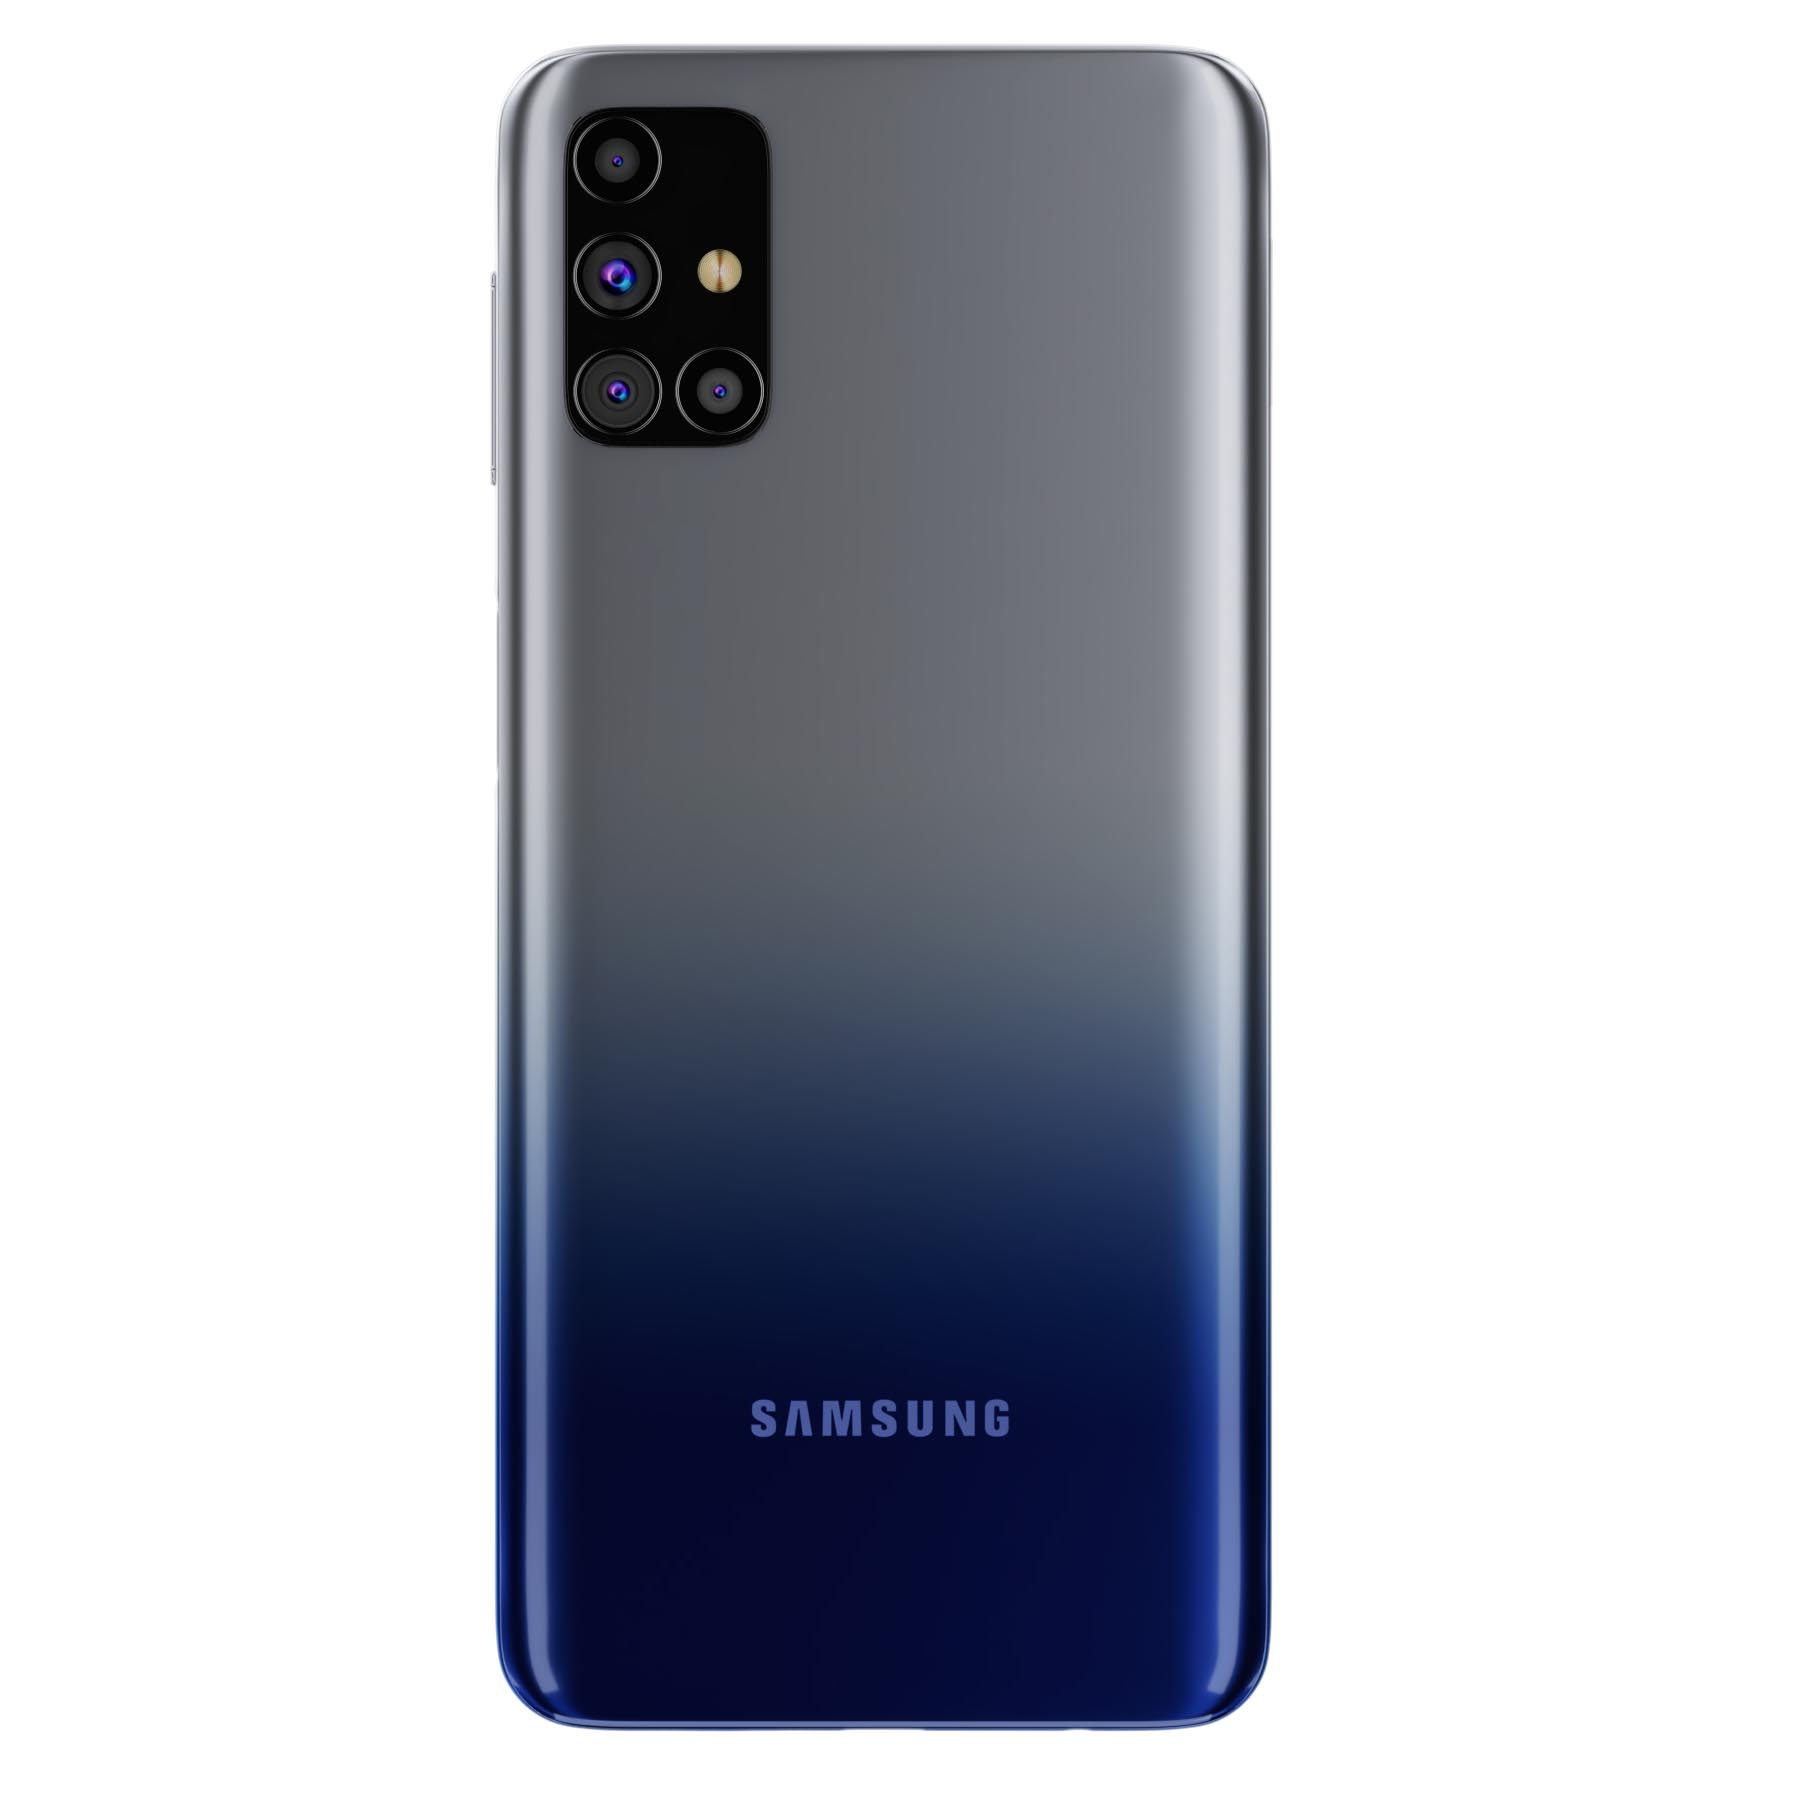 Самсунг галакси м цены. Samsung Galaxy m31 6/128 GB. Samsung m31s 128gb. Samsung Galaxy m31s 6/128gb. Samsung Galaxy m31s 128gb Black.